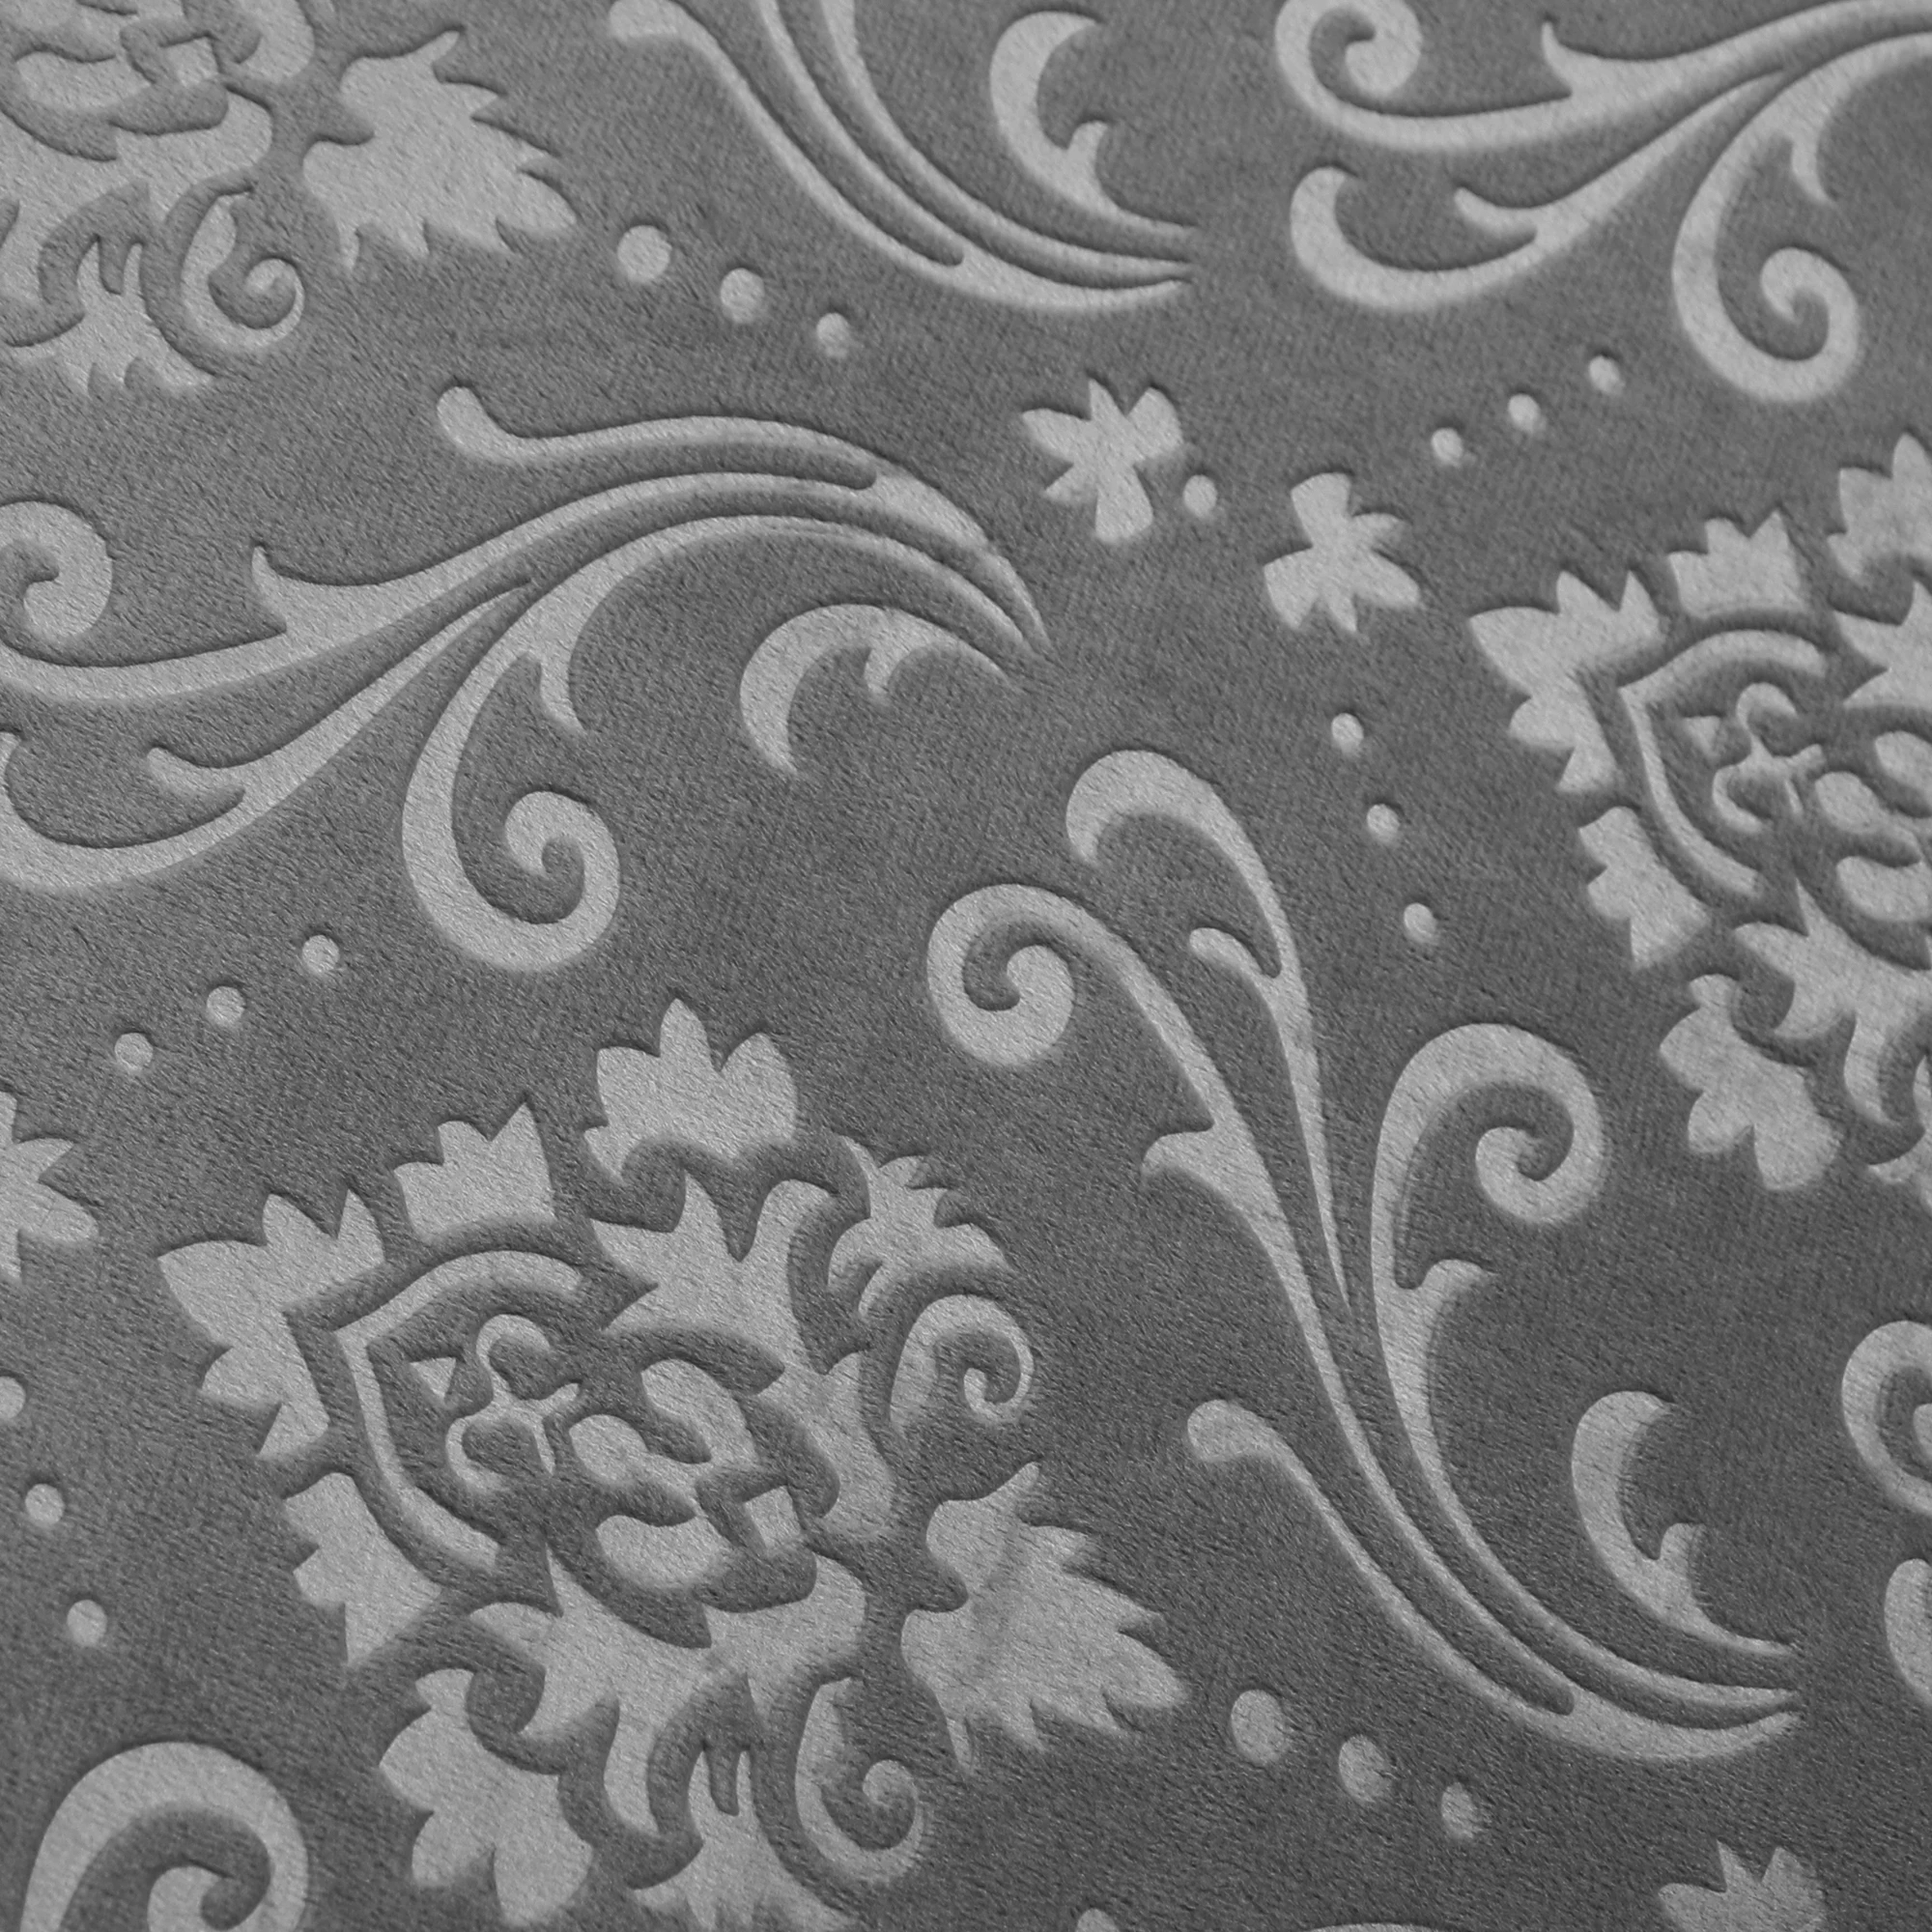 Embossed Velvet Fabric Chair Cover For Dining Room Stretch Soft Stretch Cover For Dining Chairs Seat Case For Home Winter Decor